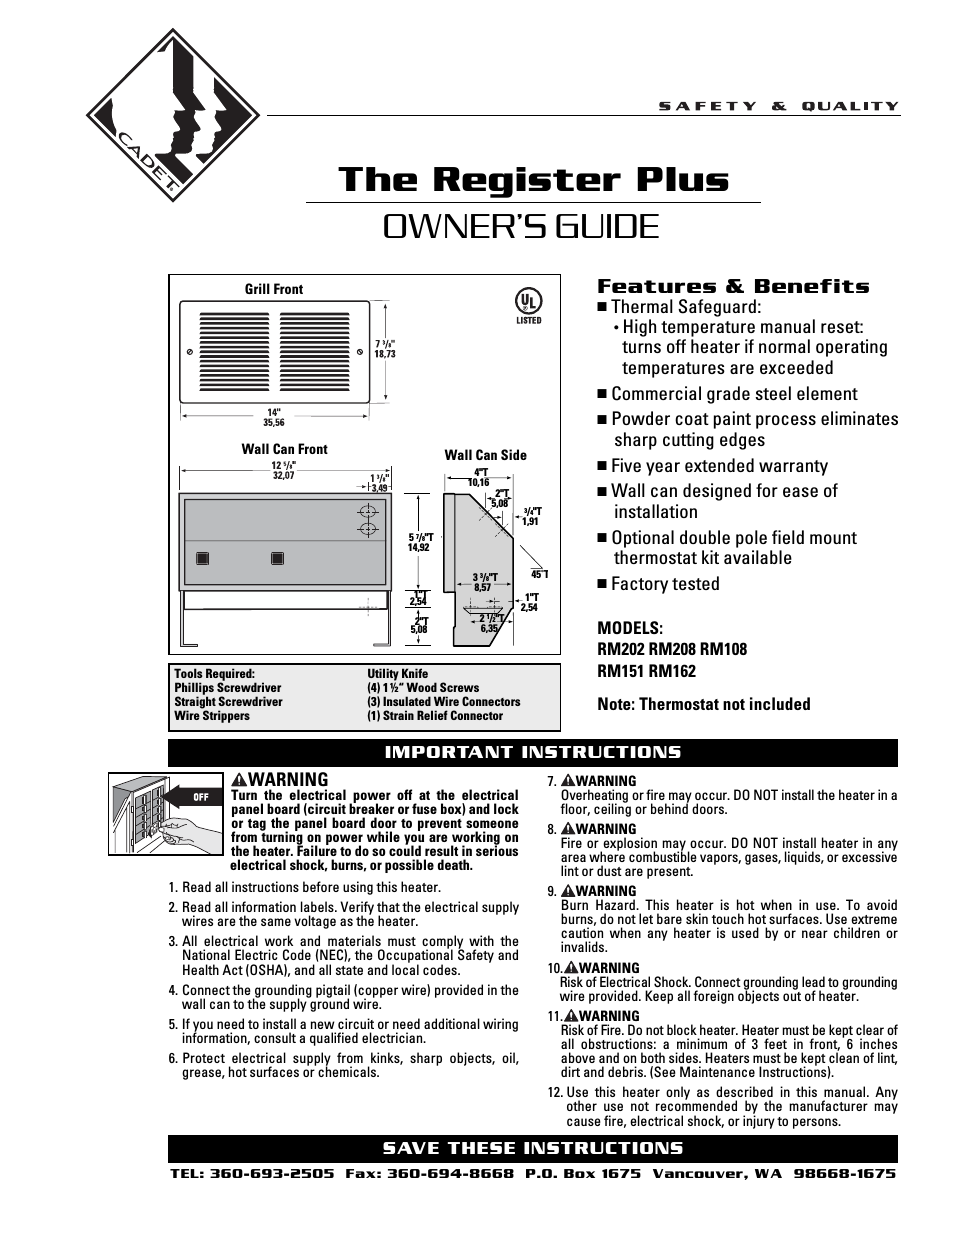 The Register Plus RM151